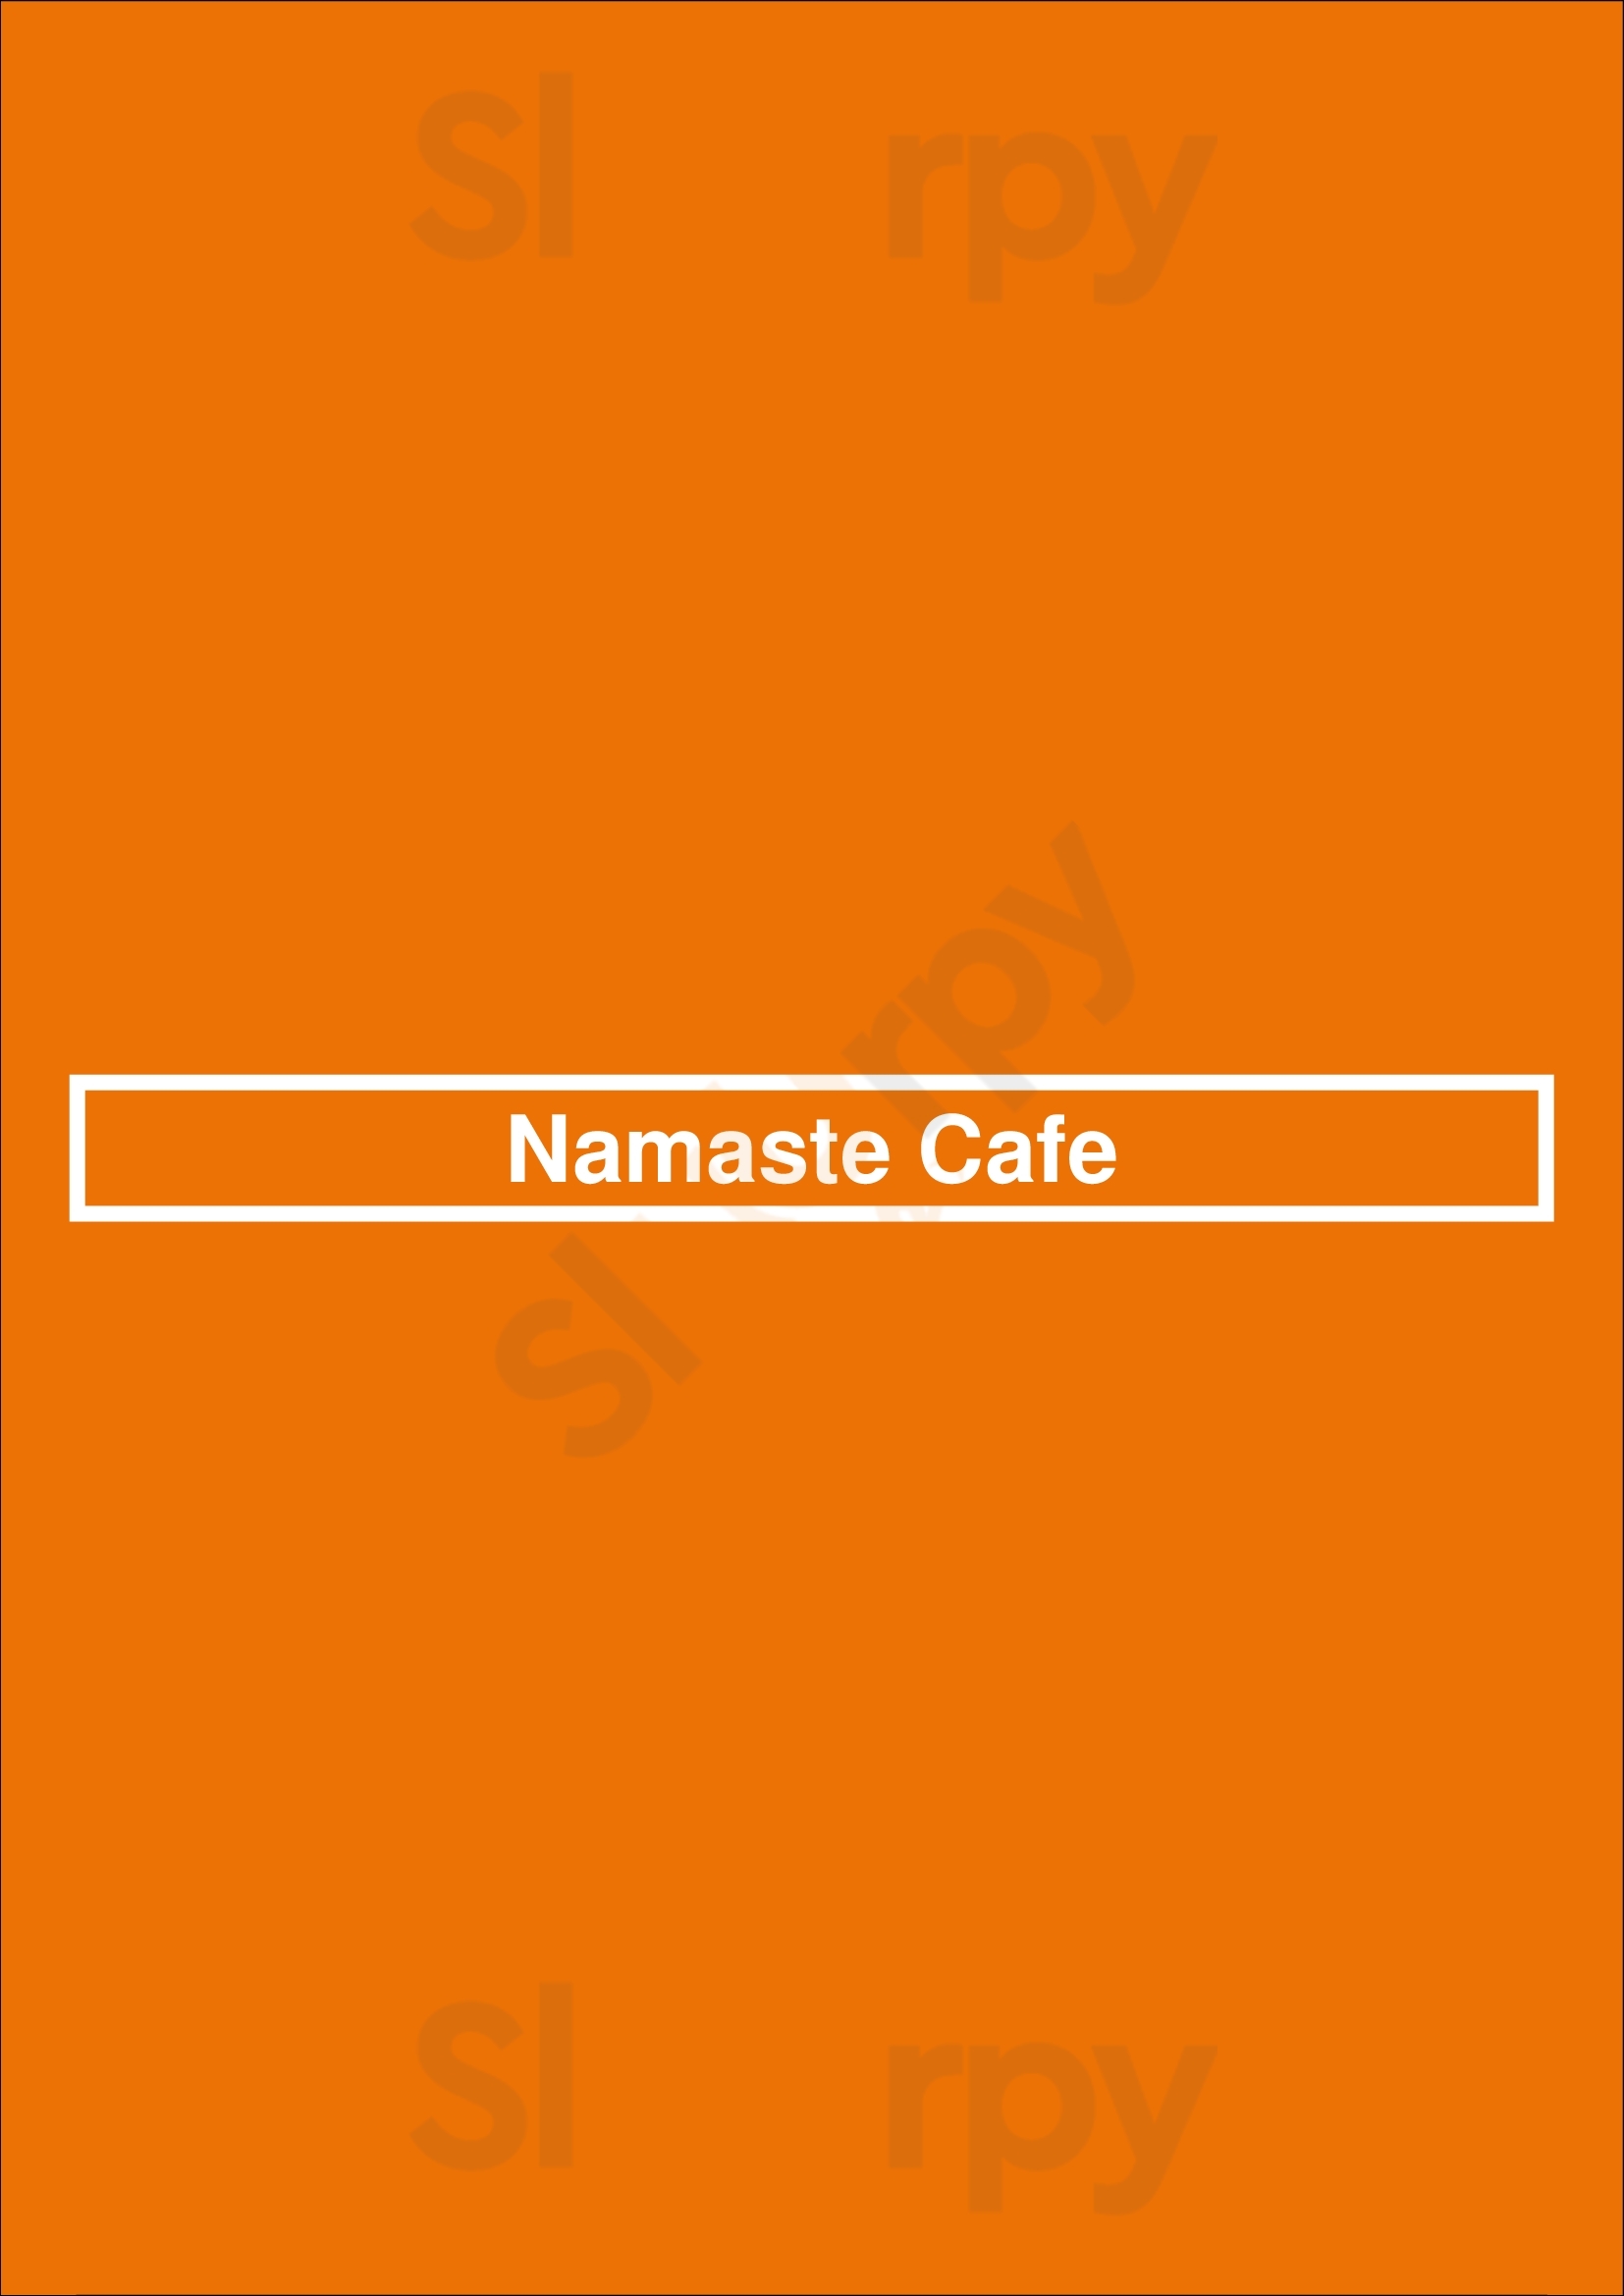 Namaste Cafe Porto Menu - 1